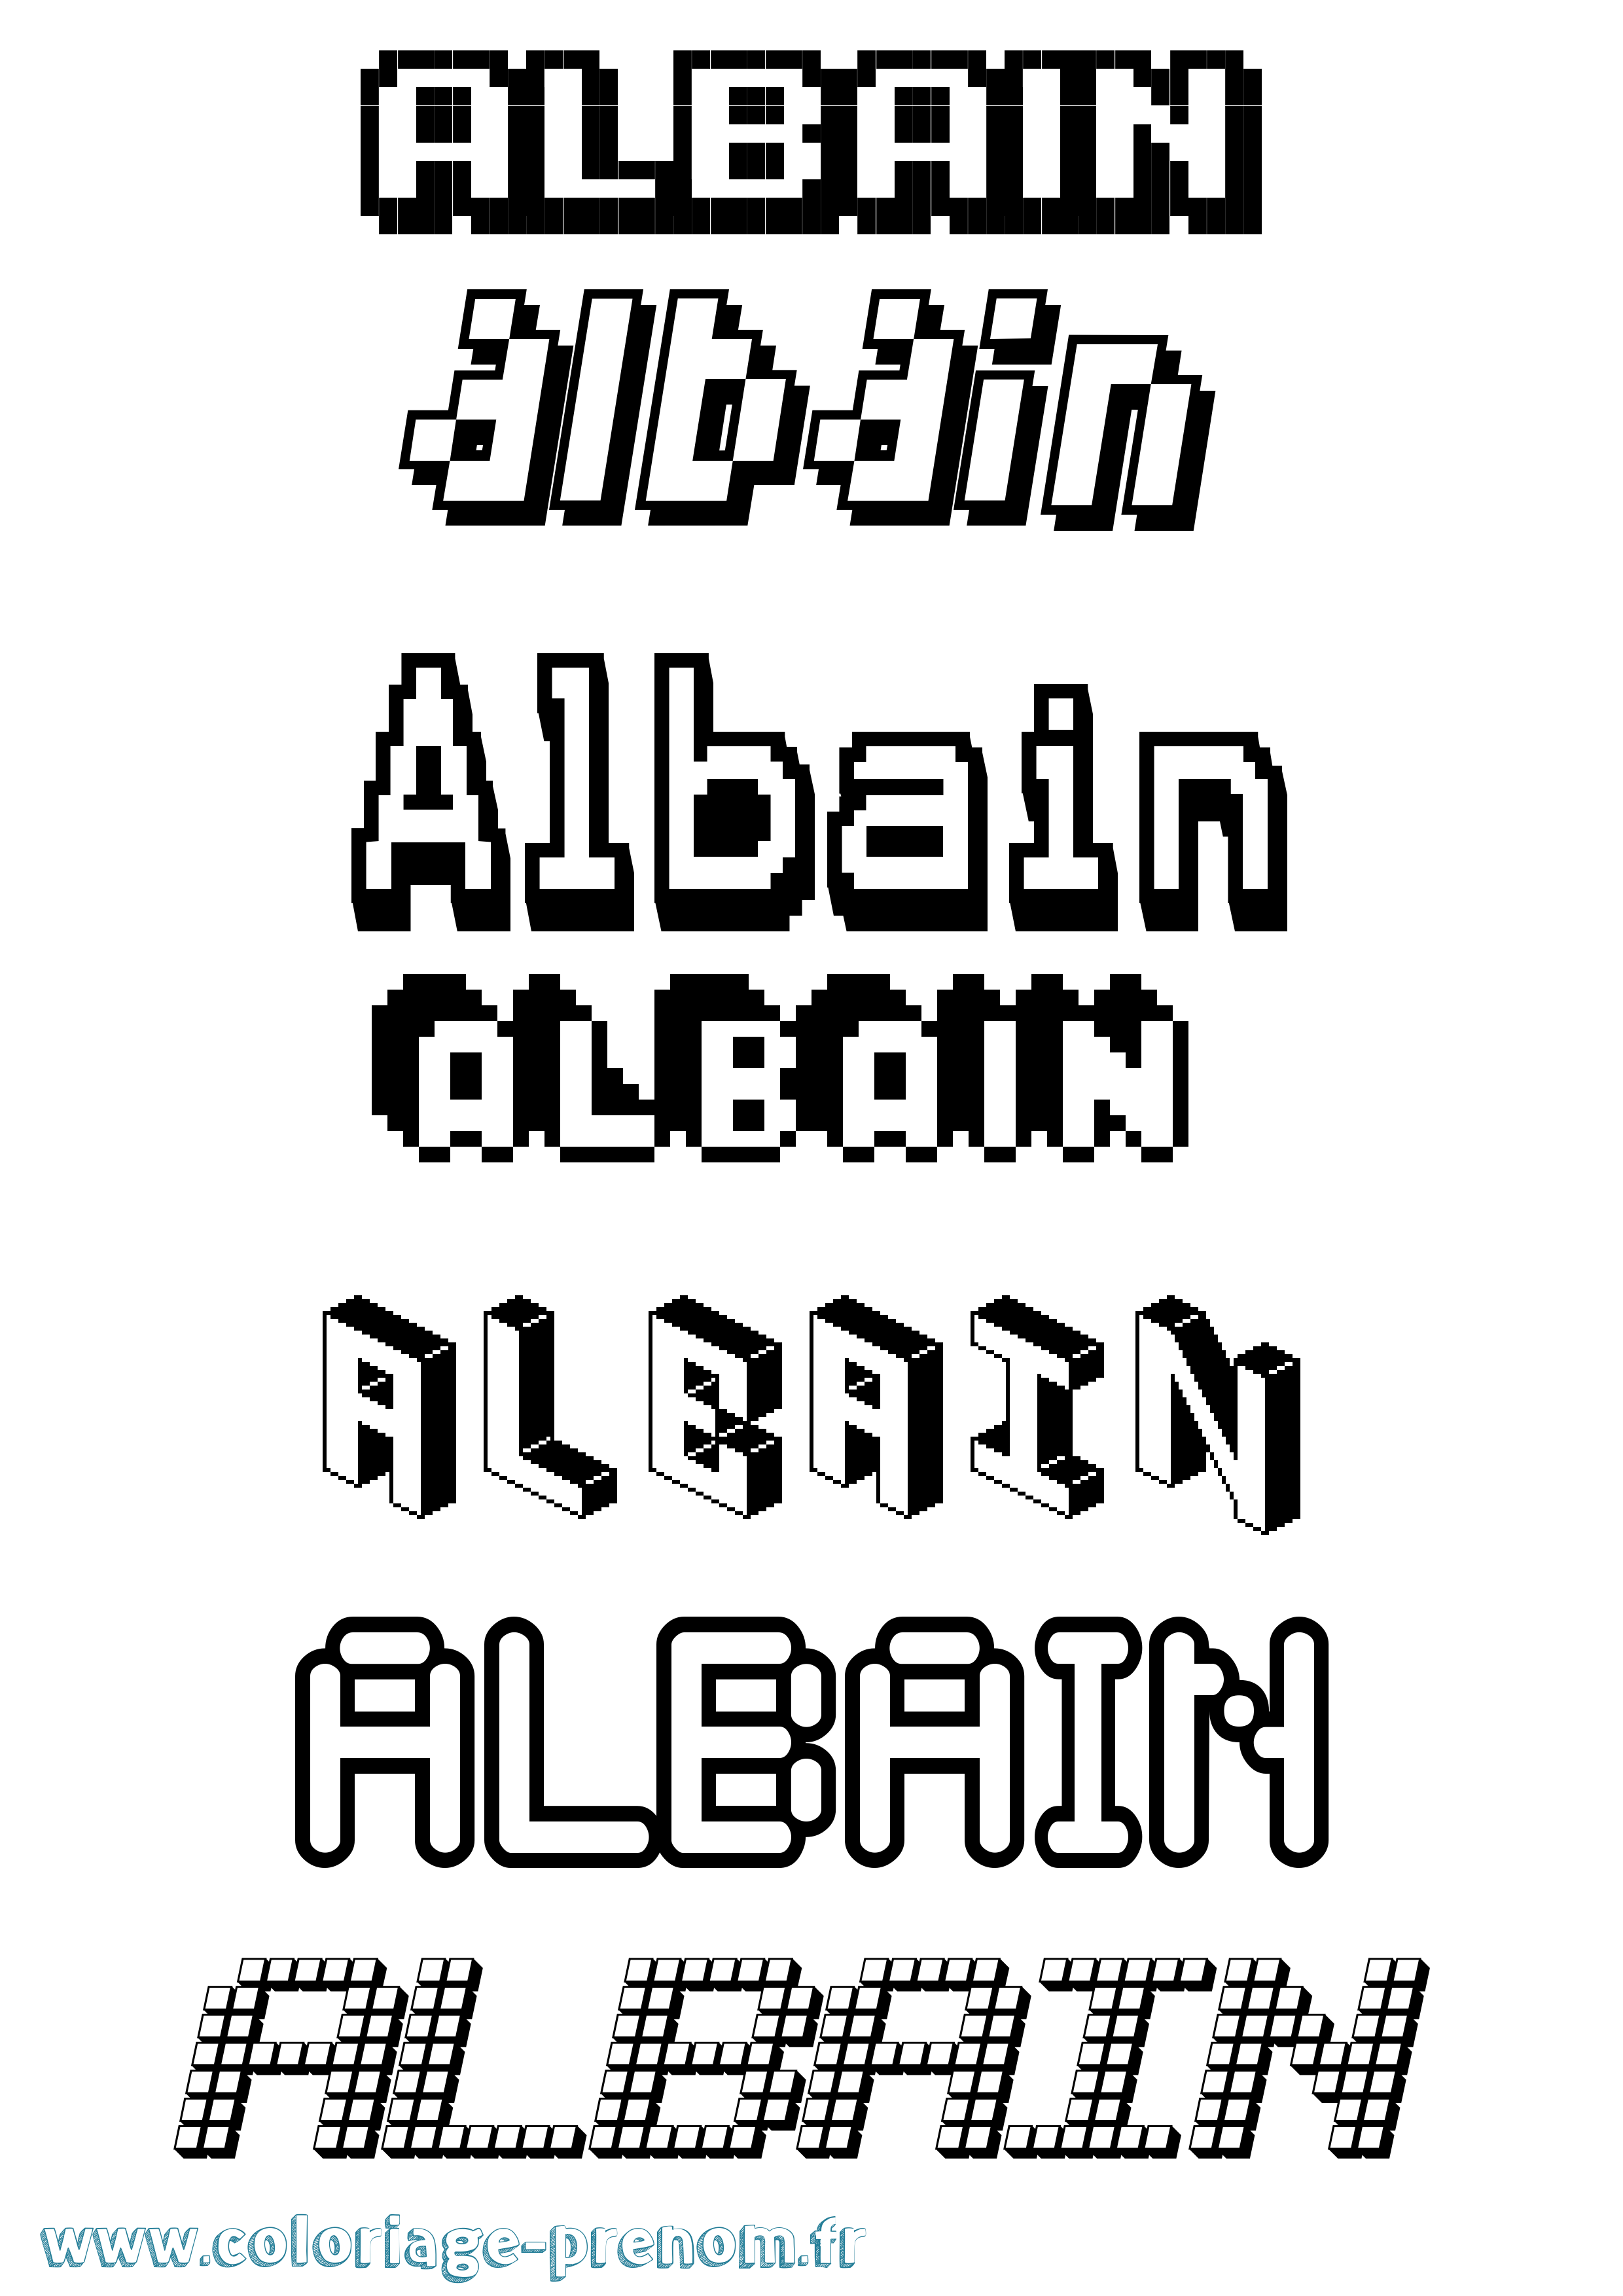 Coloriage prénom Albain Pixel